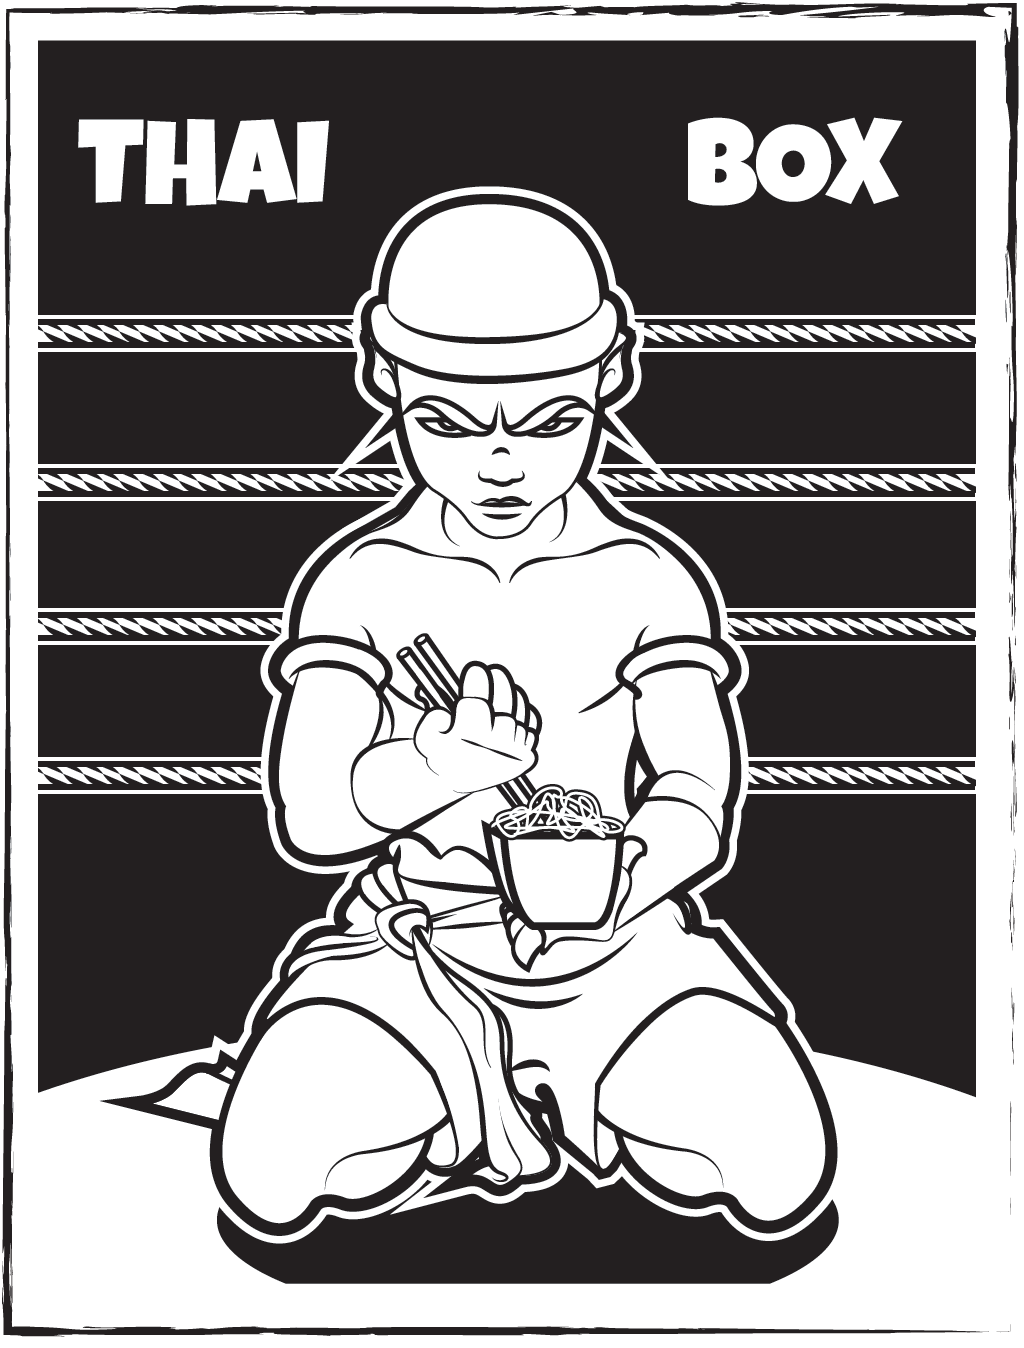 ThaiBox logo only.jpg.png